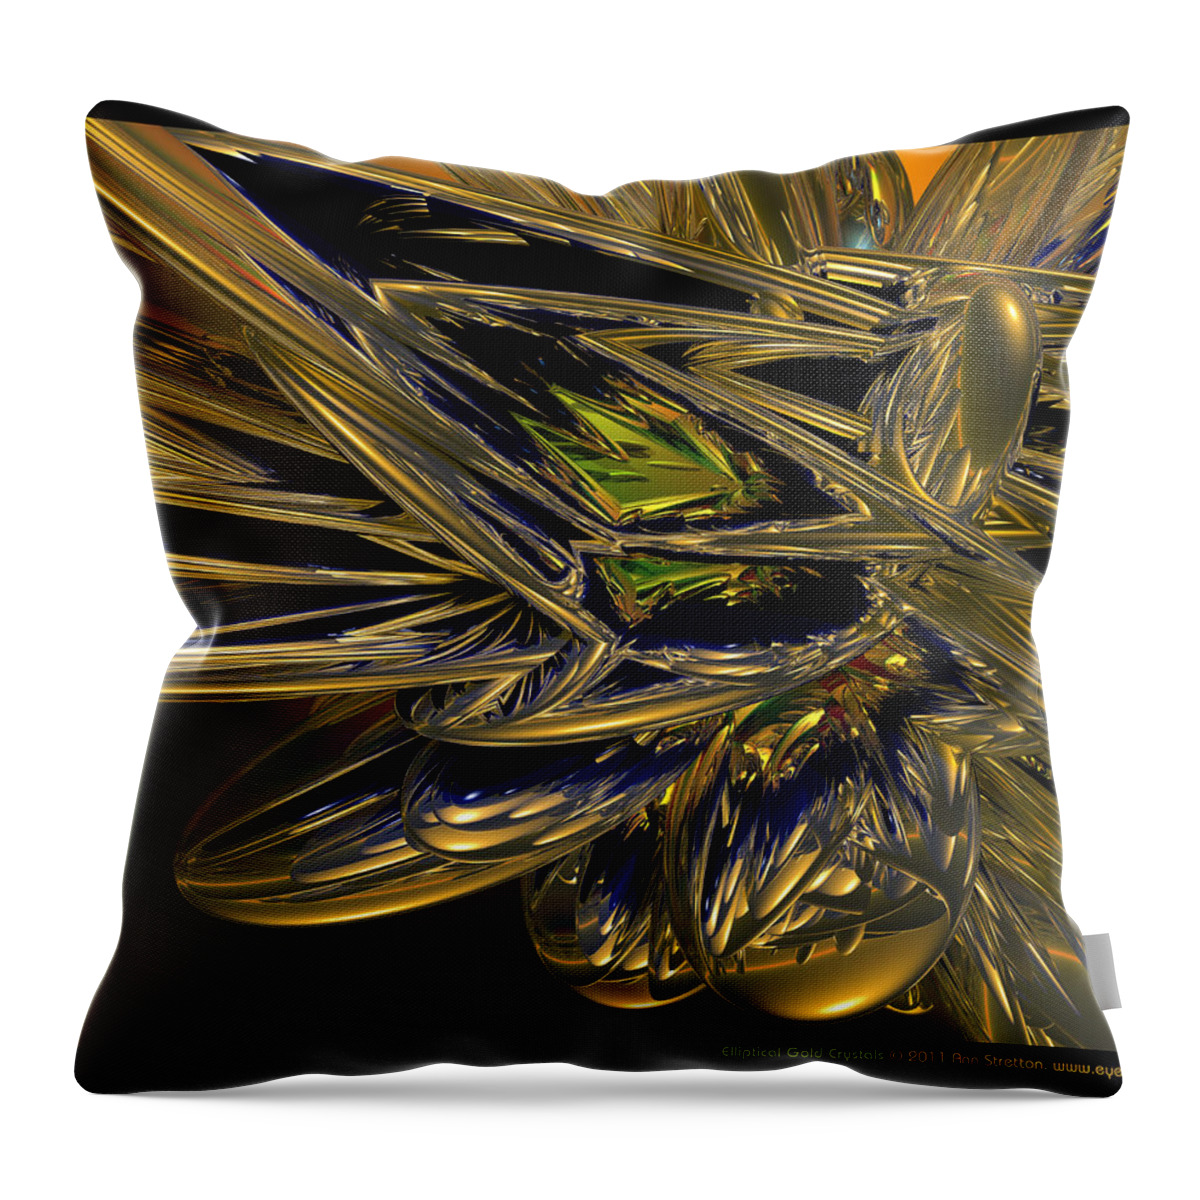 Flower Throw Pillow featuring the digital art Elliptical Gold Crystals by Ann Stretton